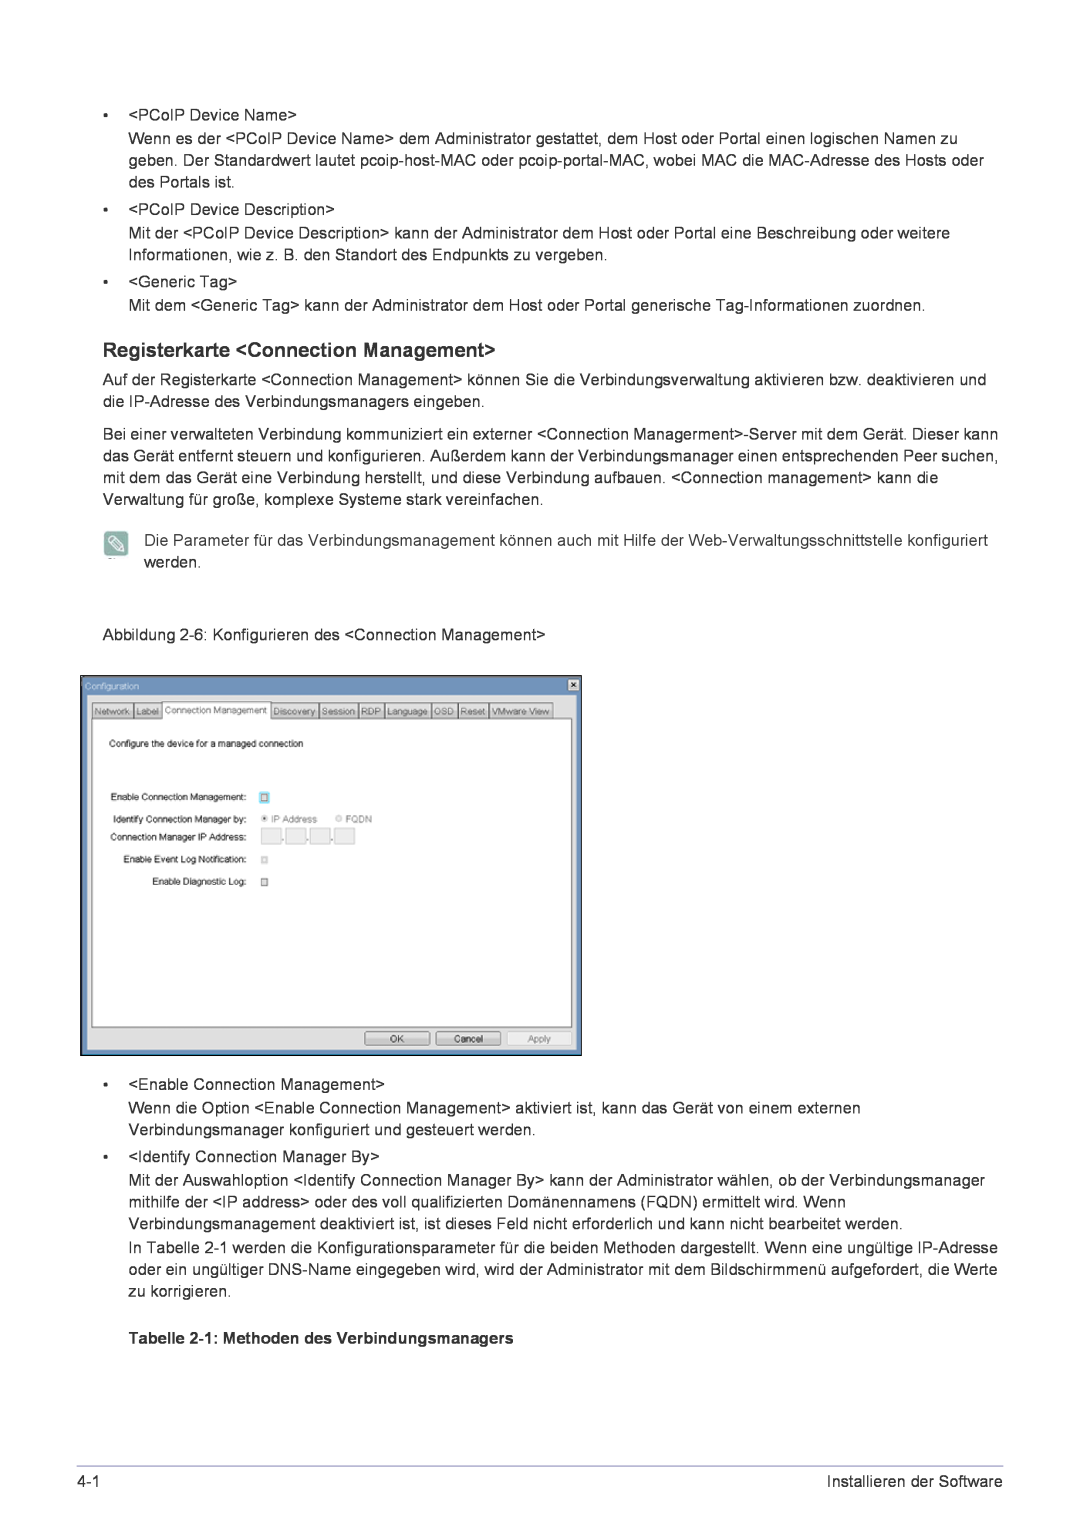 Samsung LF22NPBHBNP/EN manual Registerkarte Connection Management, Tabelle 2-1 Methoden des Verbindungsmanagers 